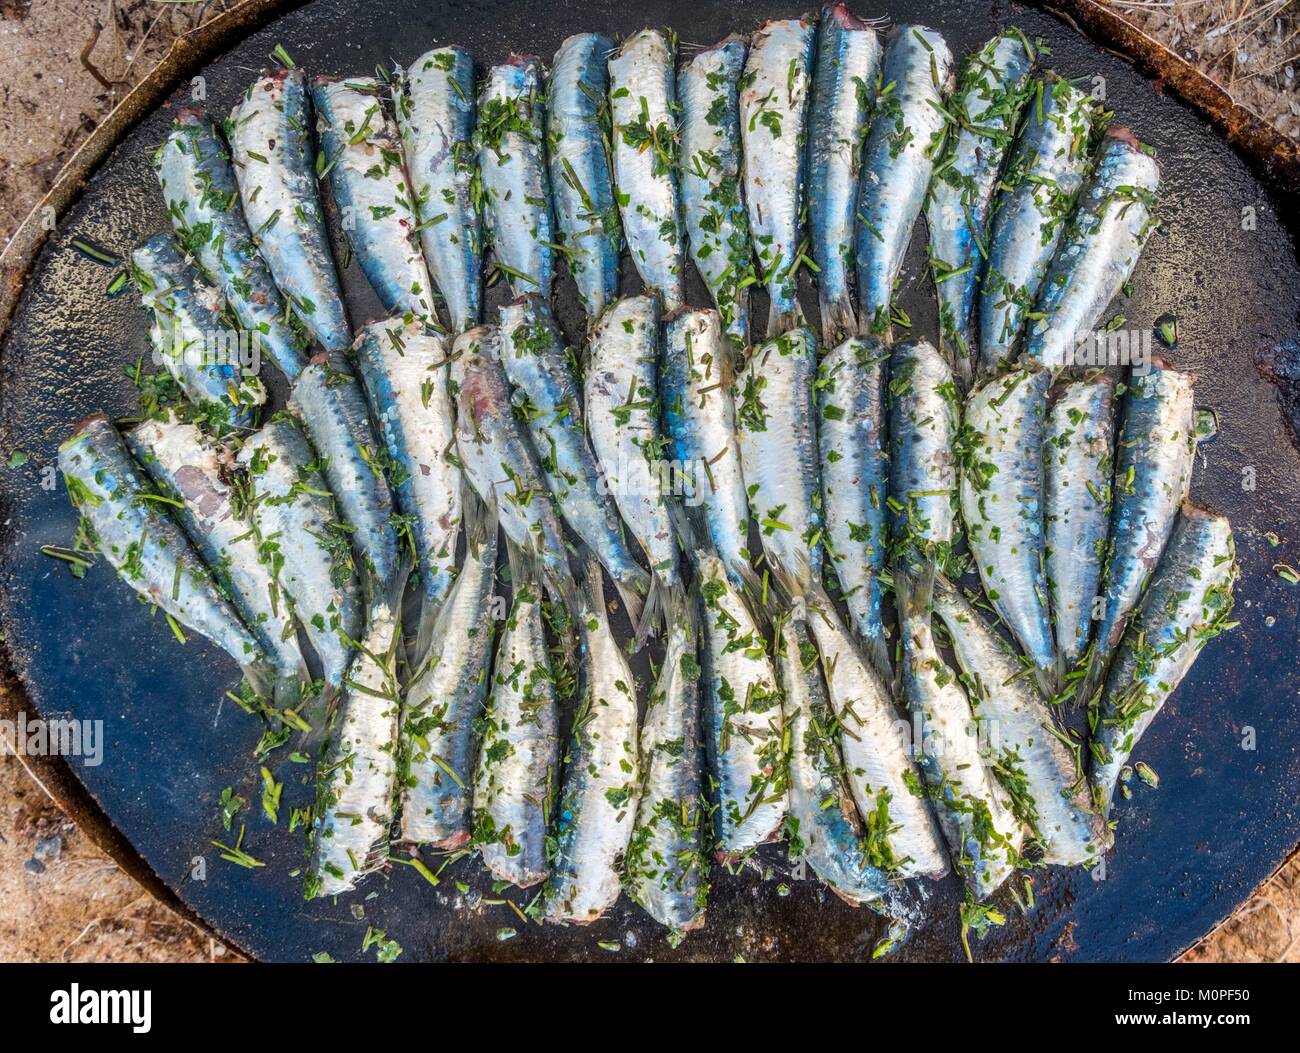 France,Charente Maritime,Oleron island,grilled sardines (Sardina pilchardus) Stock Photo